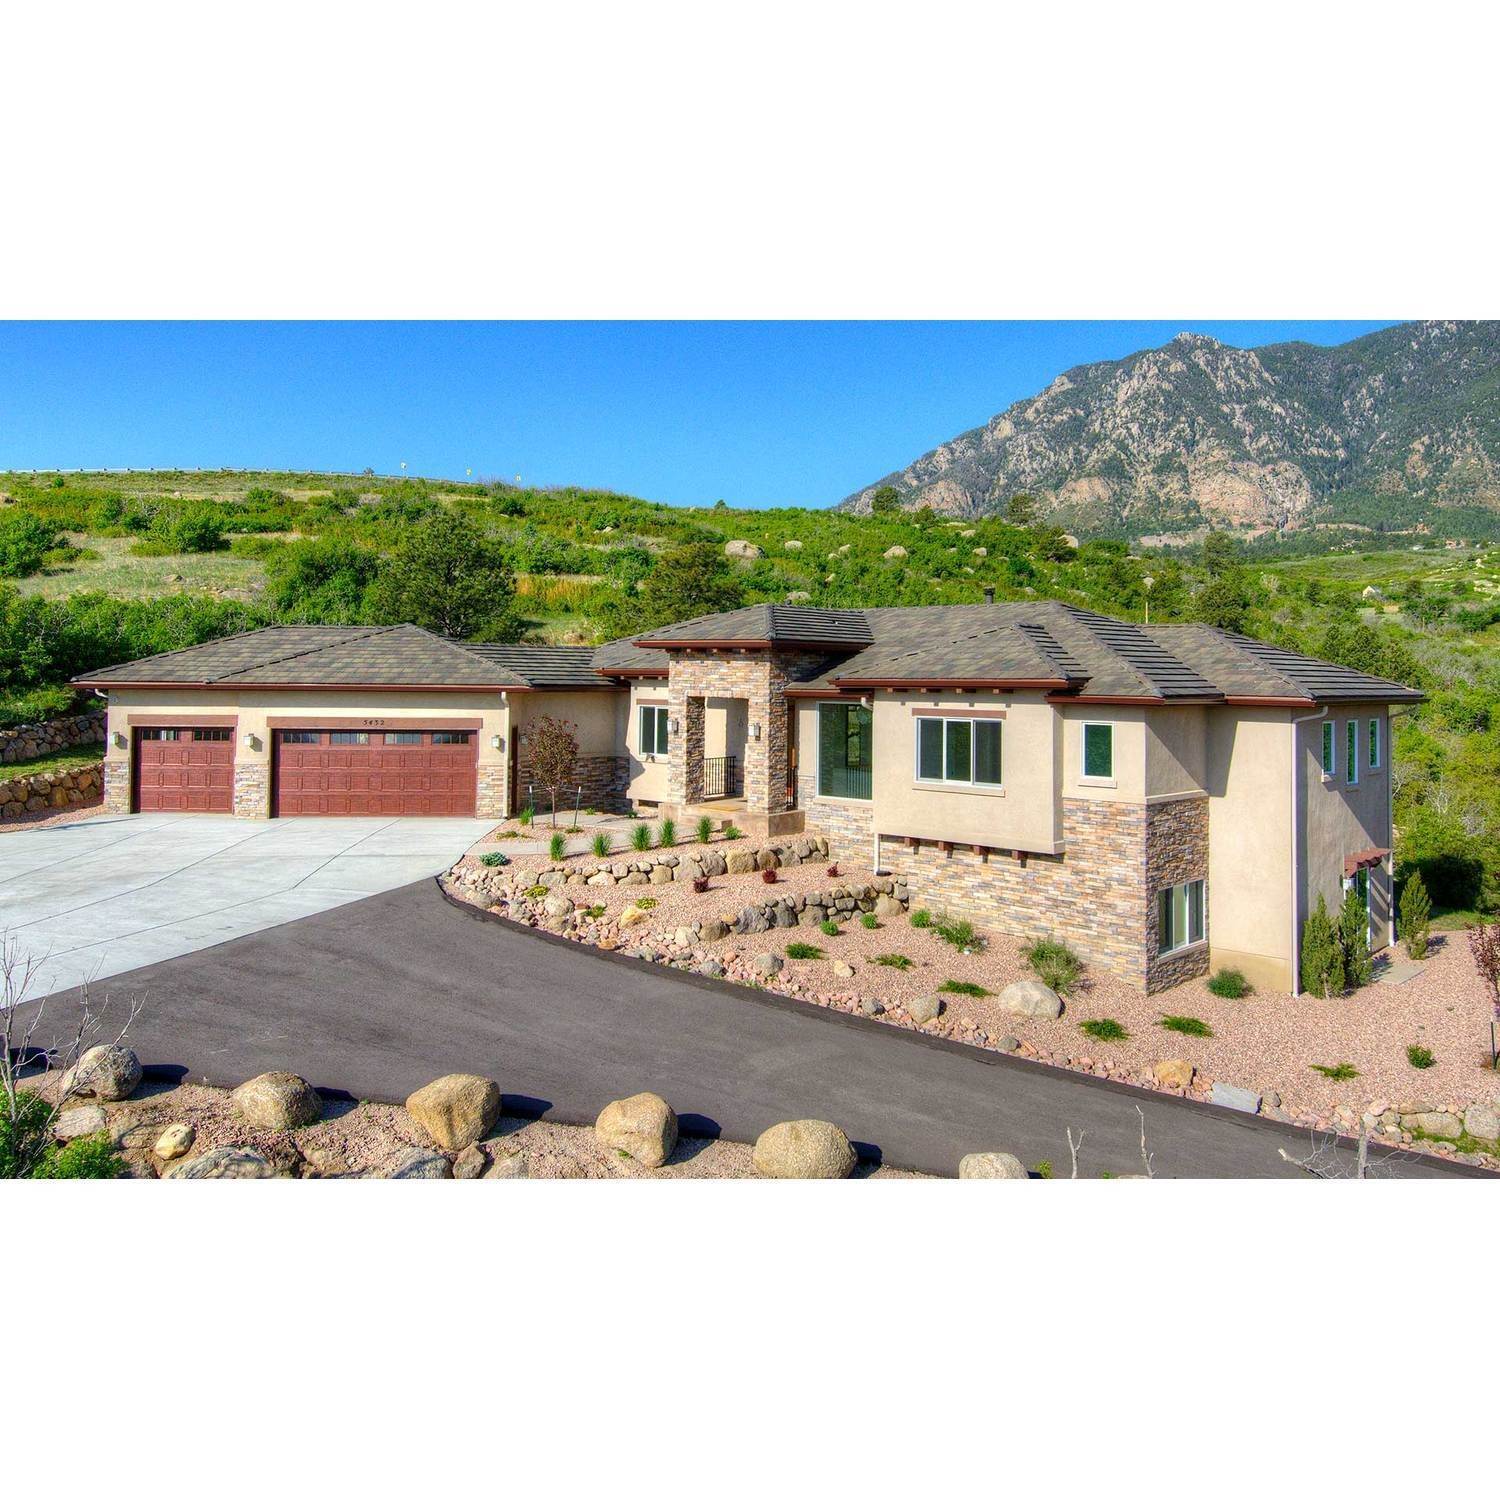 10. Galiant Homes building at 4783 Farmingdale Dr, Colorado Springs, CO 80918